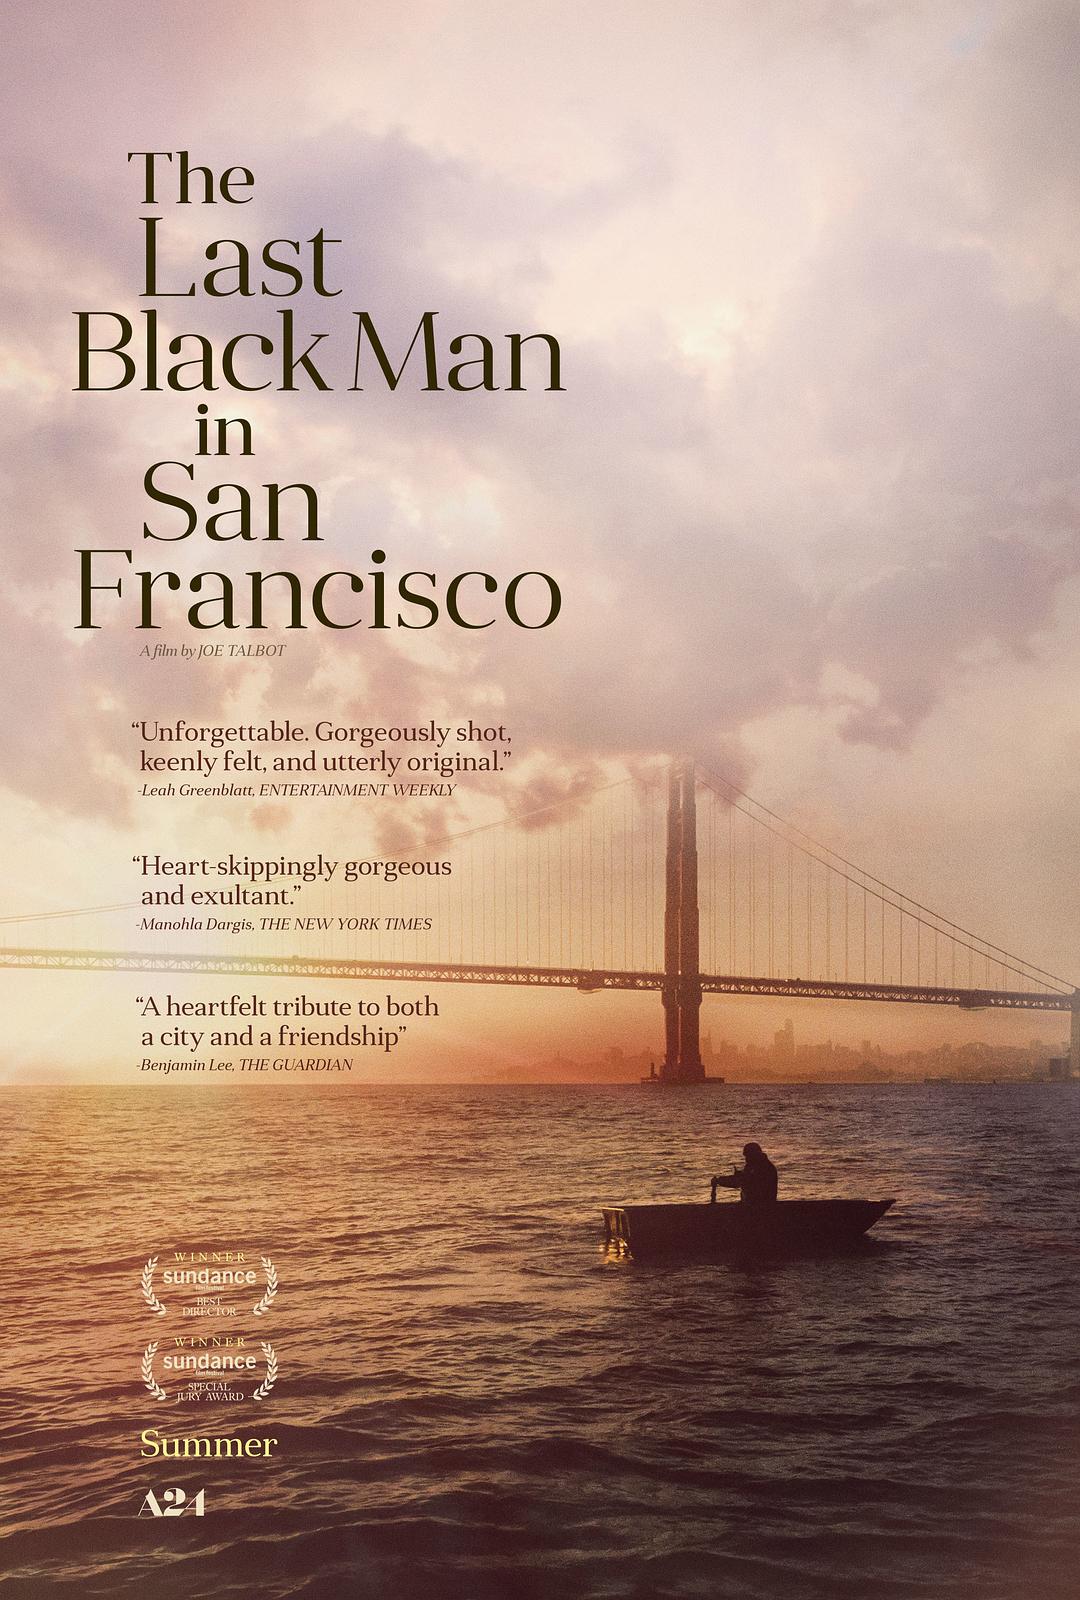 旧金山的最初一个黑人 The.Last.Black.Man.in.San.Francisco.2019.1080p.BluRay.REMUX.AVC.DTS-HD.MA.5.1-FGT 31.92GB-1.png